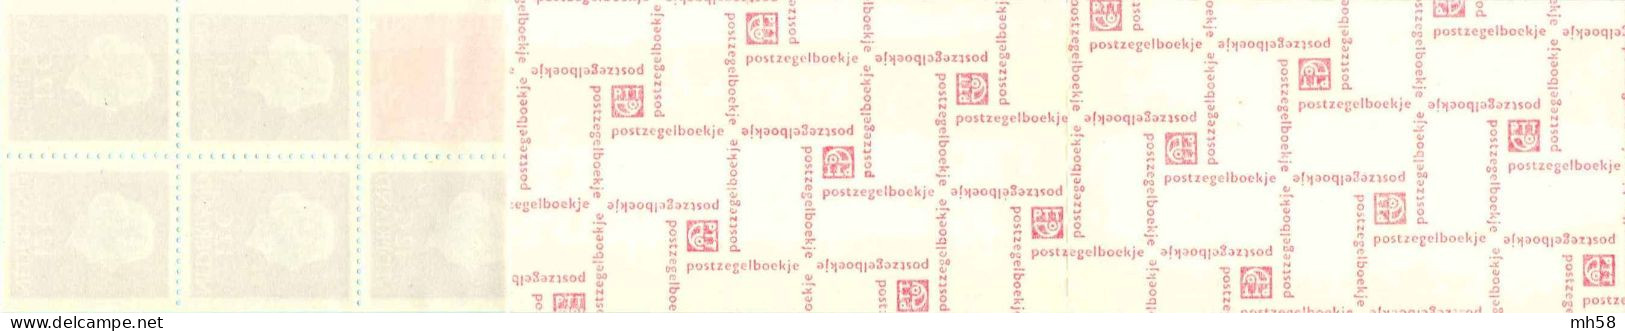 PAYS-BAS NEDERLAND 1969 - Carnet / Booklet / MH Sans Indice - 1 G Chiffre / Juliana - YT C 600AcB / MI MH 8y - Libretti